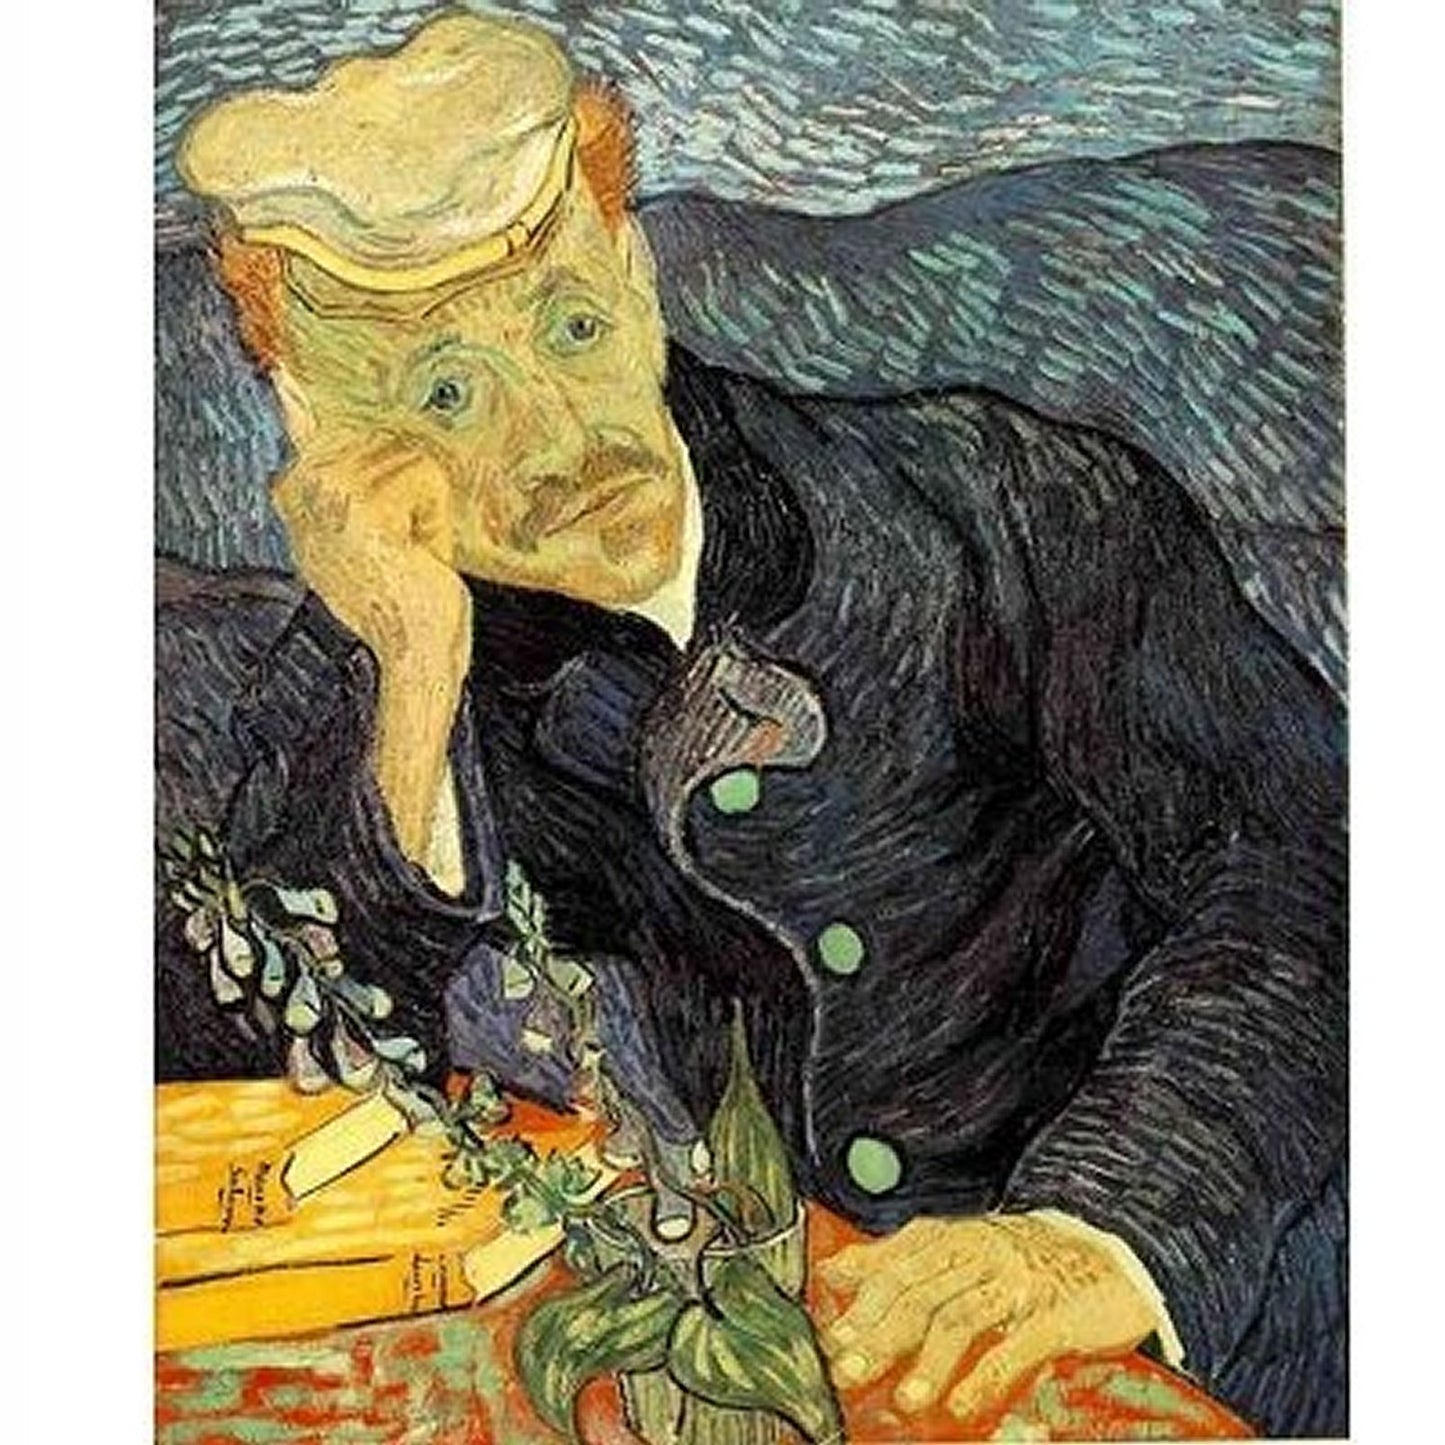 Dtoys - Van Gogh : Portrait of Doctor Gachet - 1000 Piece Jigsaw Puzzle